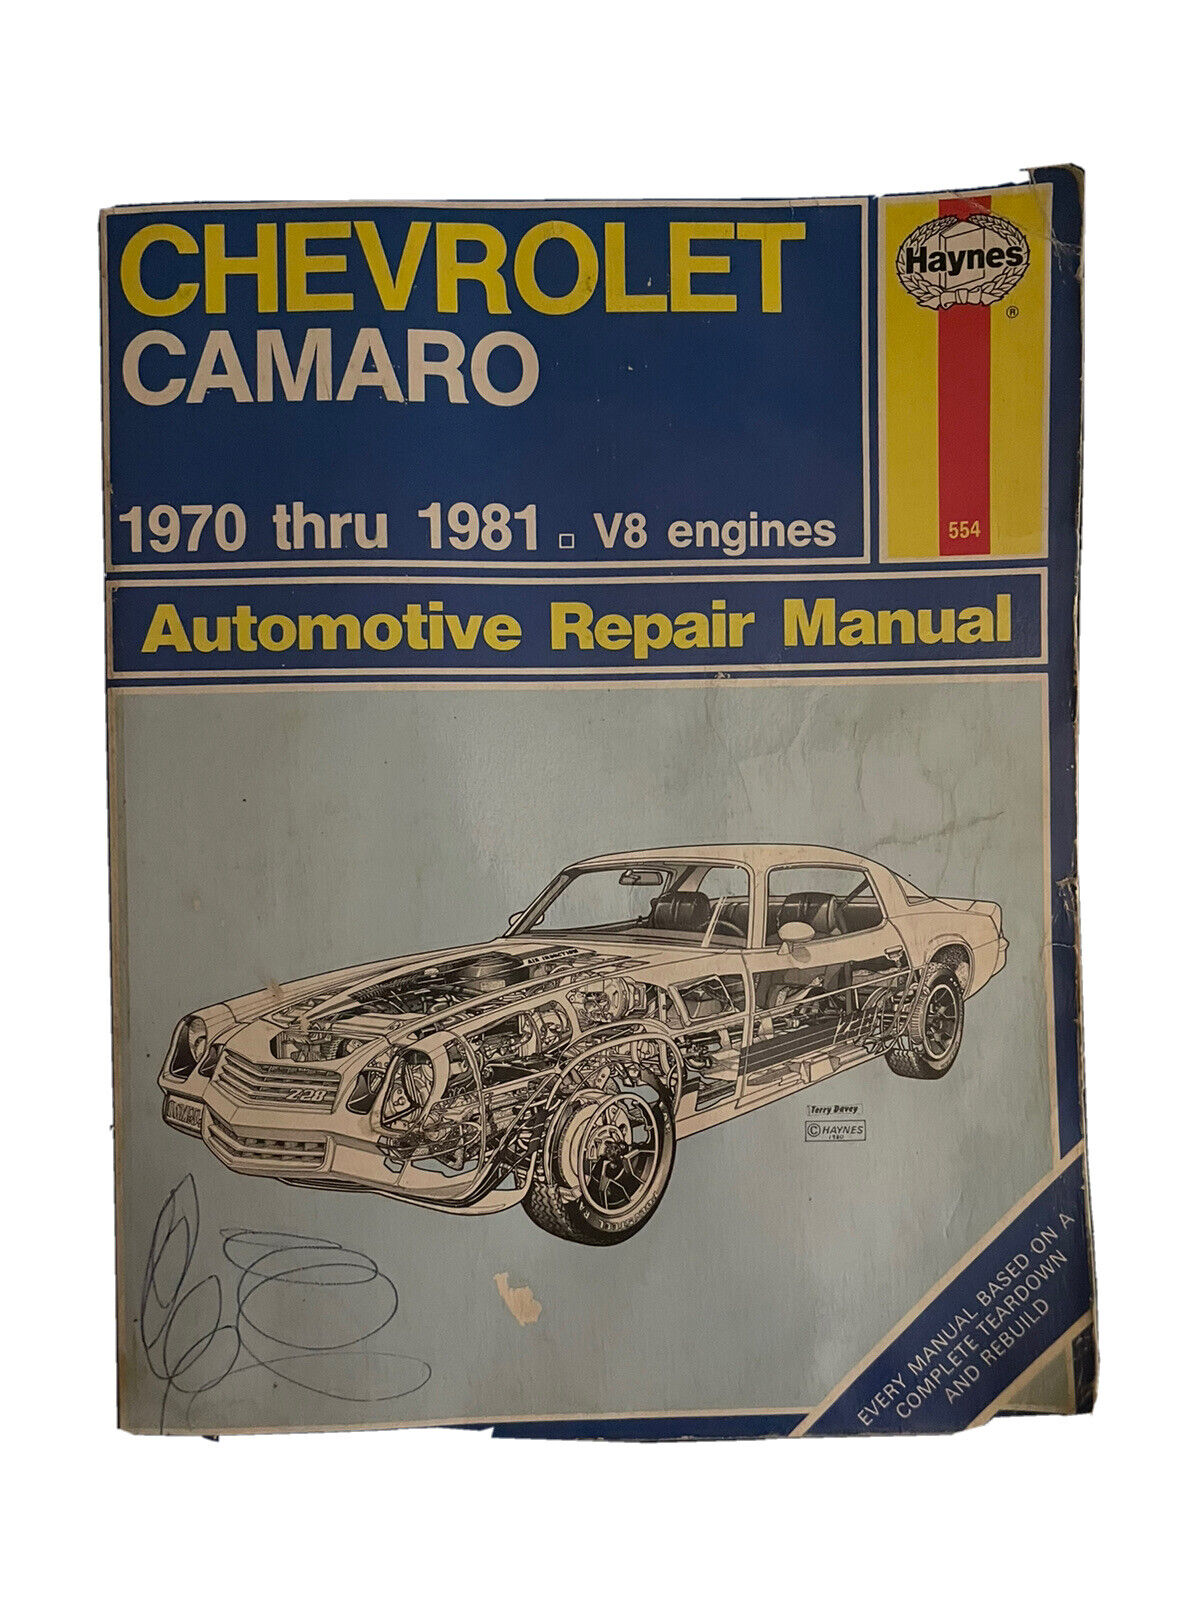 CHEVROLET CAMARO 1970 THRU 1981 V8 ENGINES HAYNES AUTOMOTIVE REPAIR MANUAL